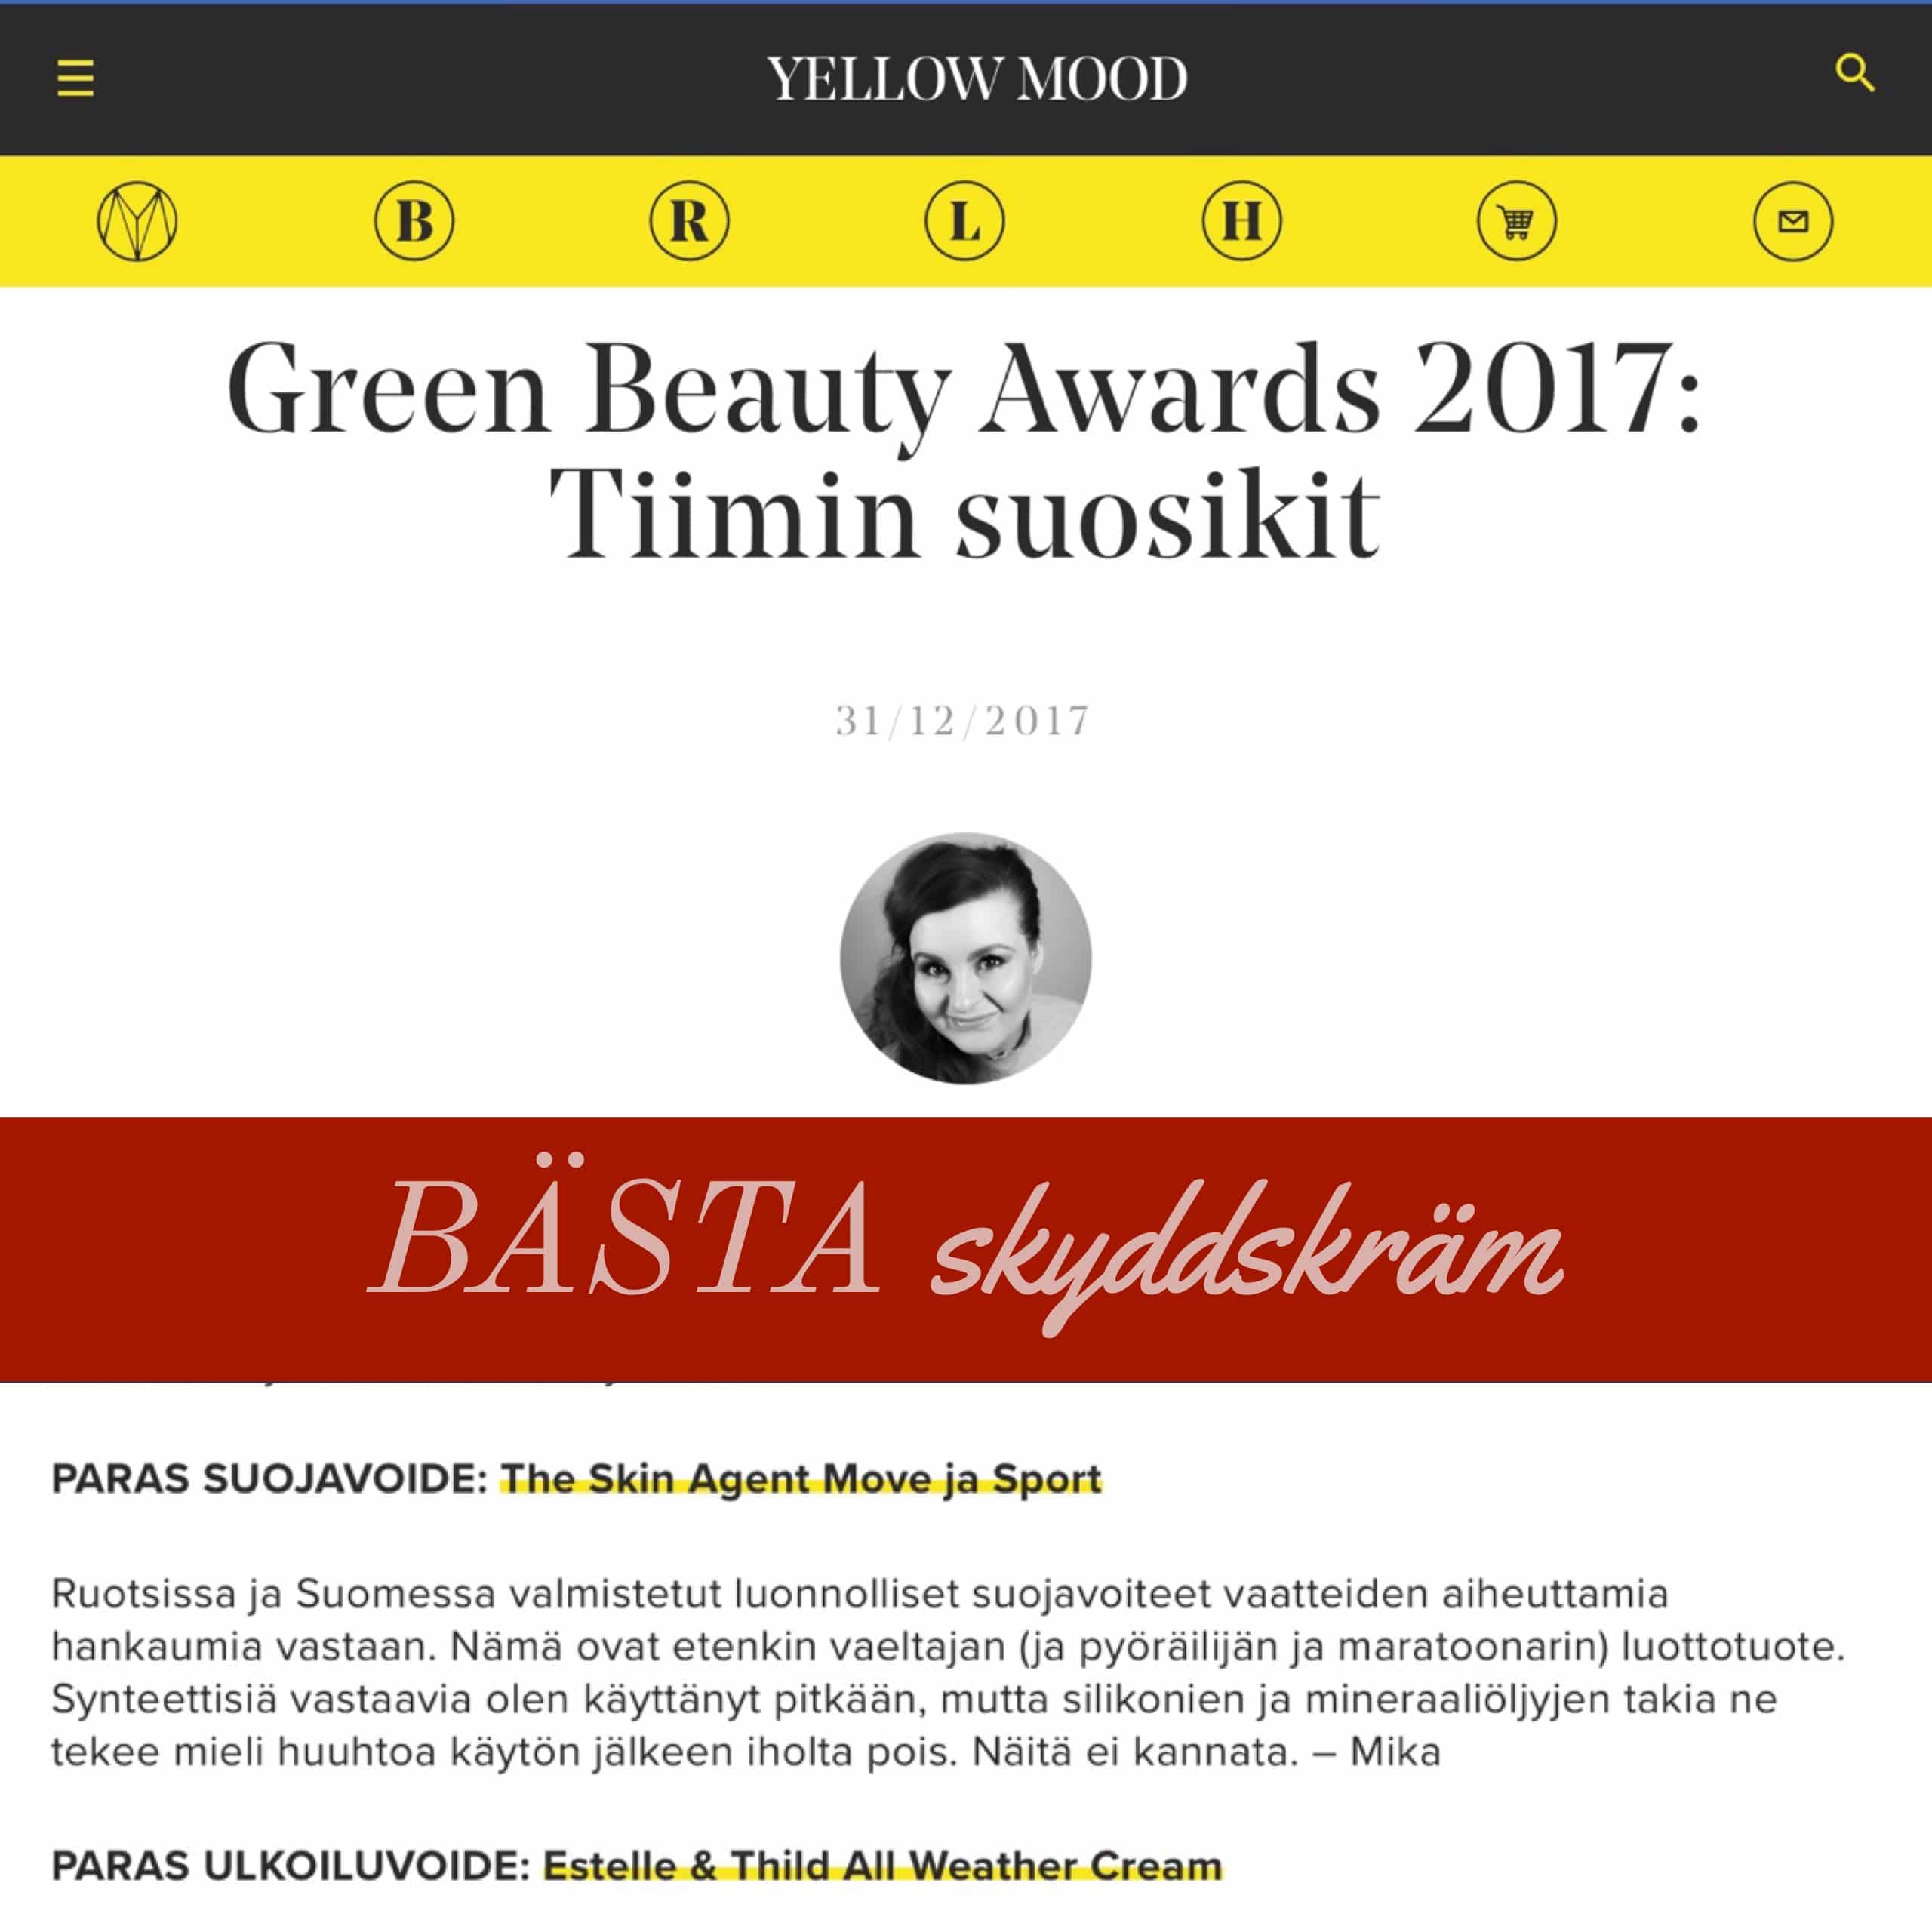 Green Beauty Award - the skin agent